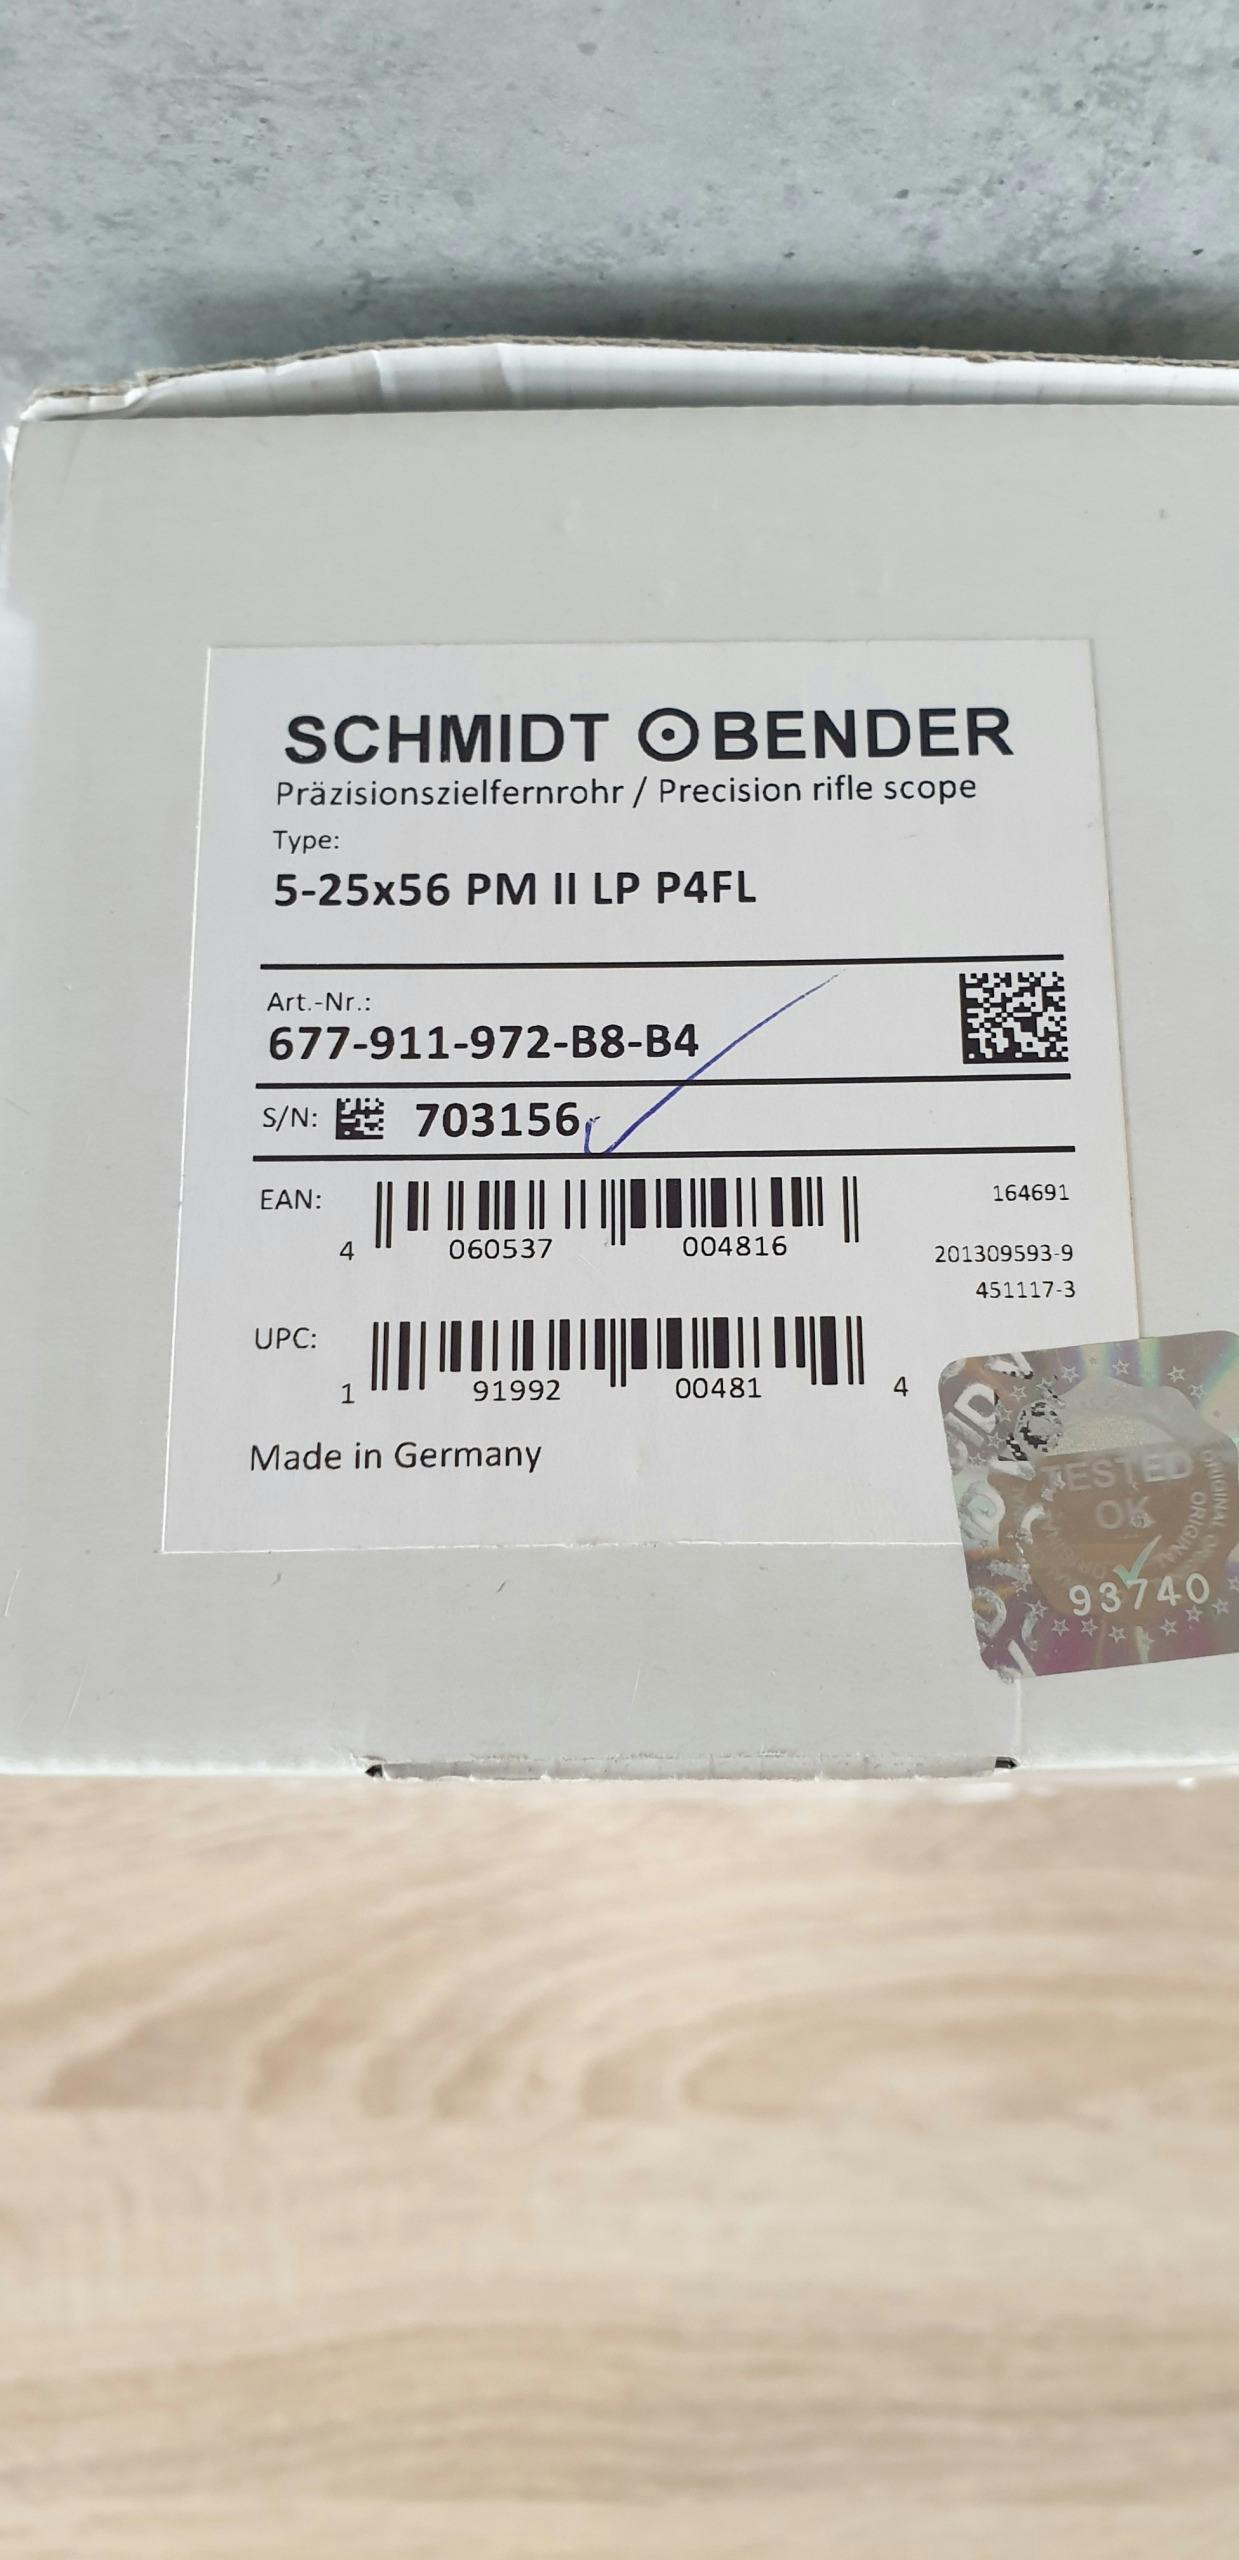 https://admin.blackarea.eu/wp-content/uploads/2021/06/Schmidt-Bender-optika-udaje-na-krabici-scaled-1.jpg